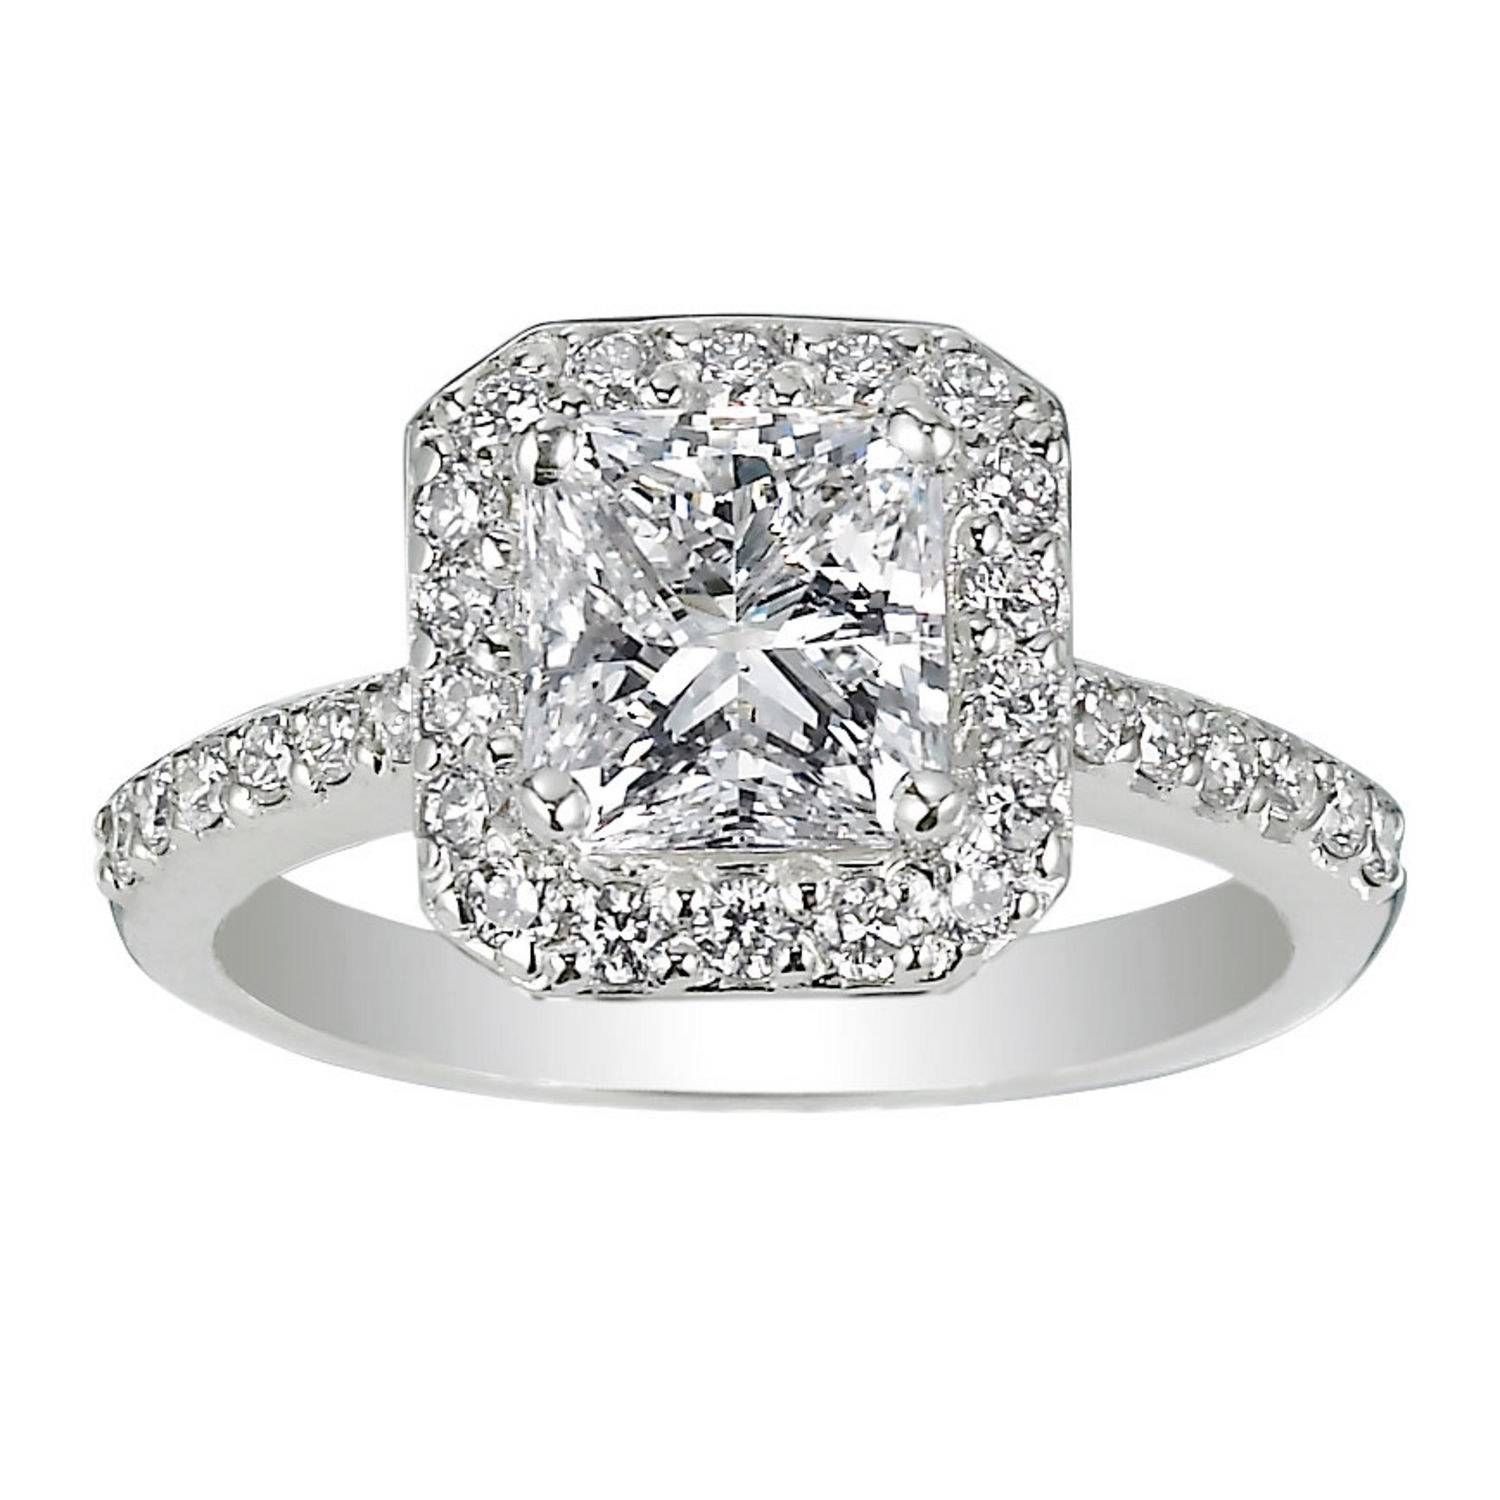 62 Diamond Engagement Rings Under $5,000 | Glamour Inside Bling Wedding Rings (View 1 of 15)